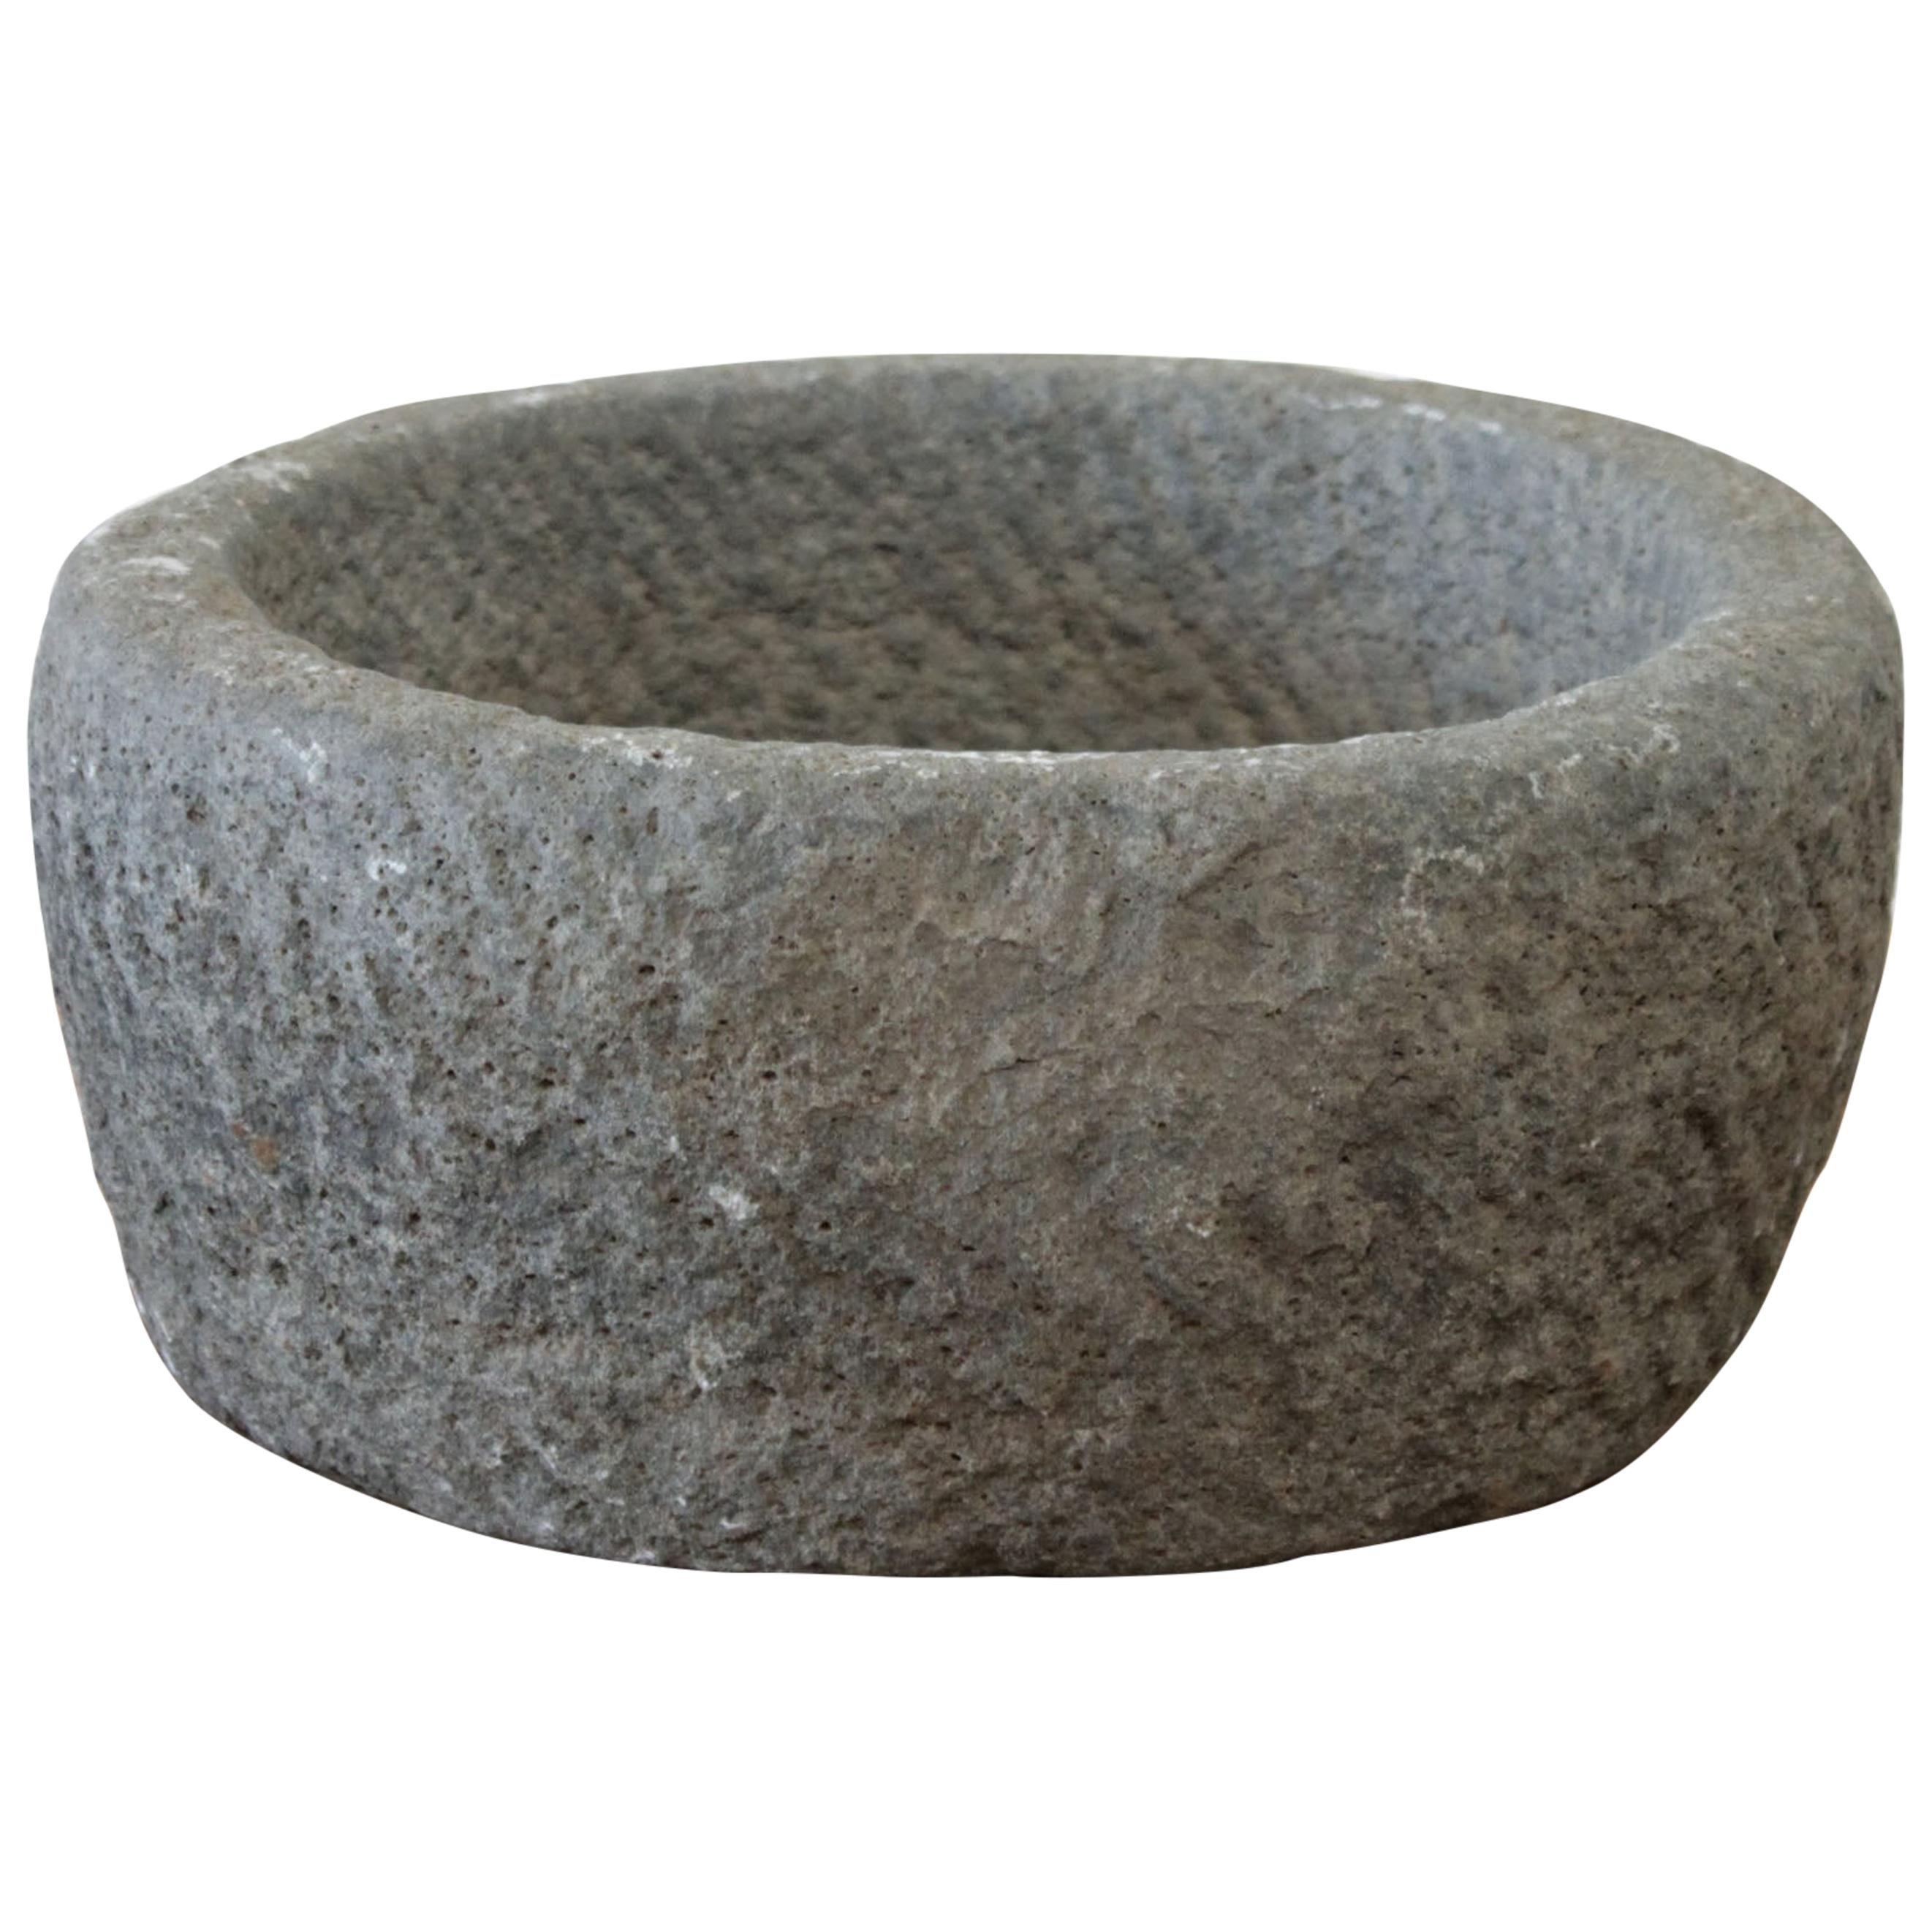 Antique Stone Mortar Bowl For Sale